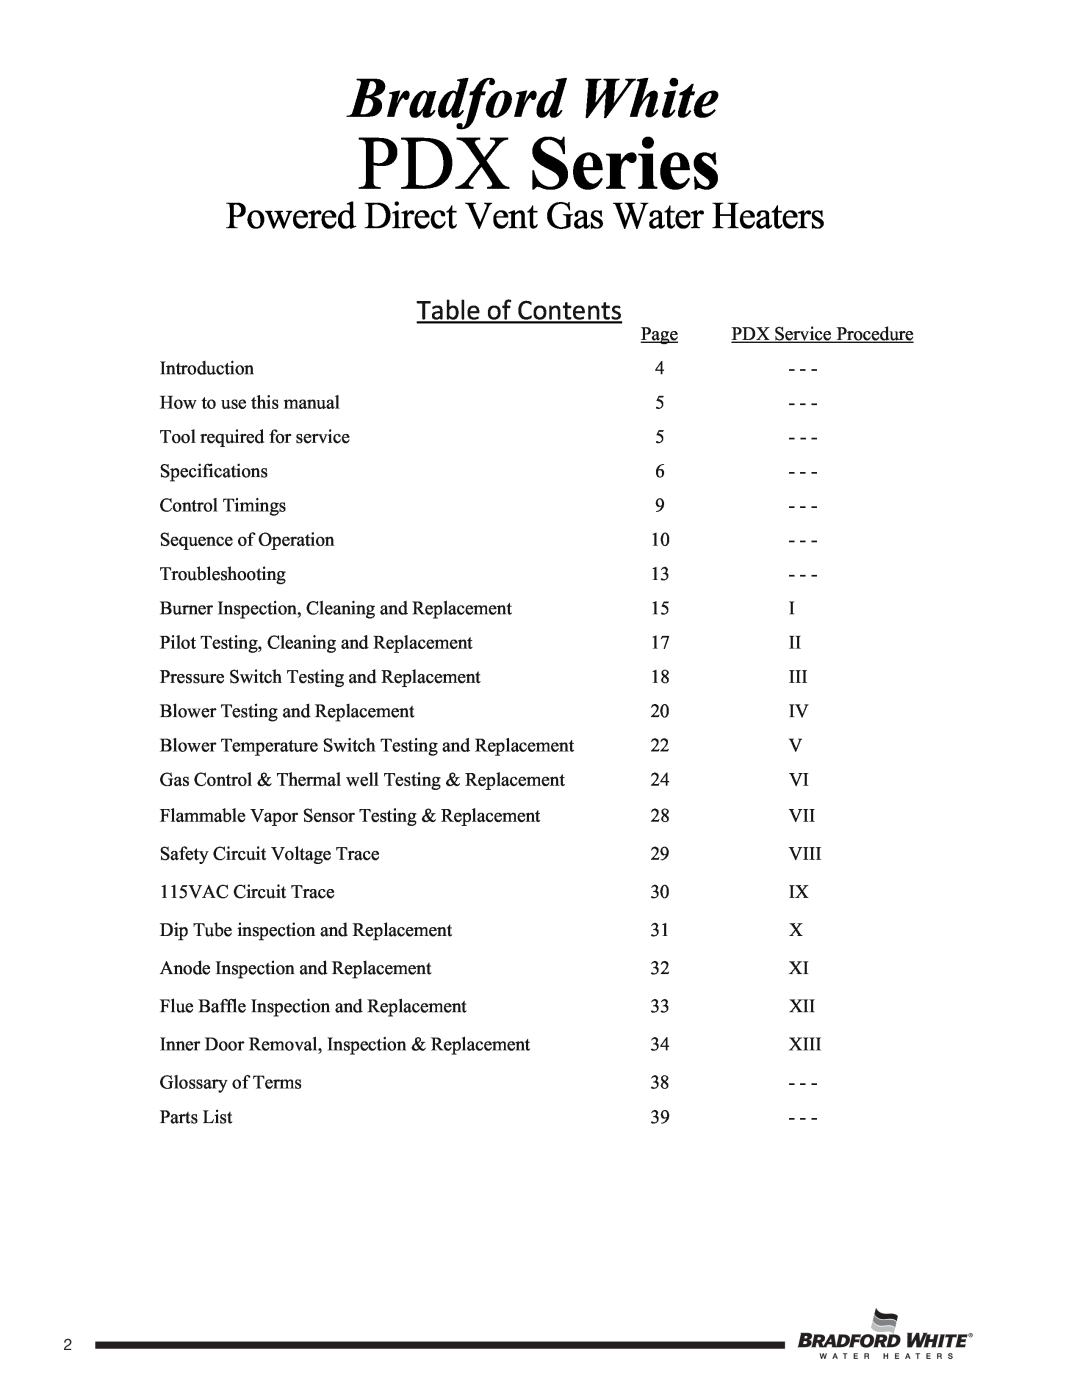 Honeywell PDX450S*F(BN,SX), PDX75S70F(B,S,C)*(N,X), PDX65S65F(B,S,C)*(N,X), PDX440S*F(BN,SX) service manual Table of Contents 